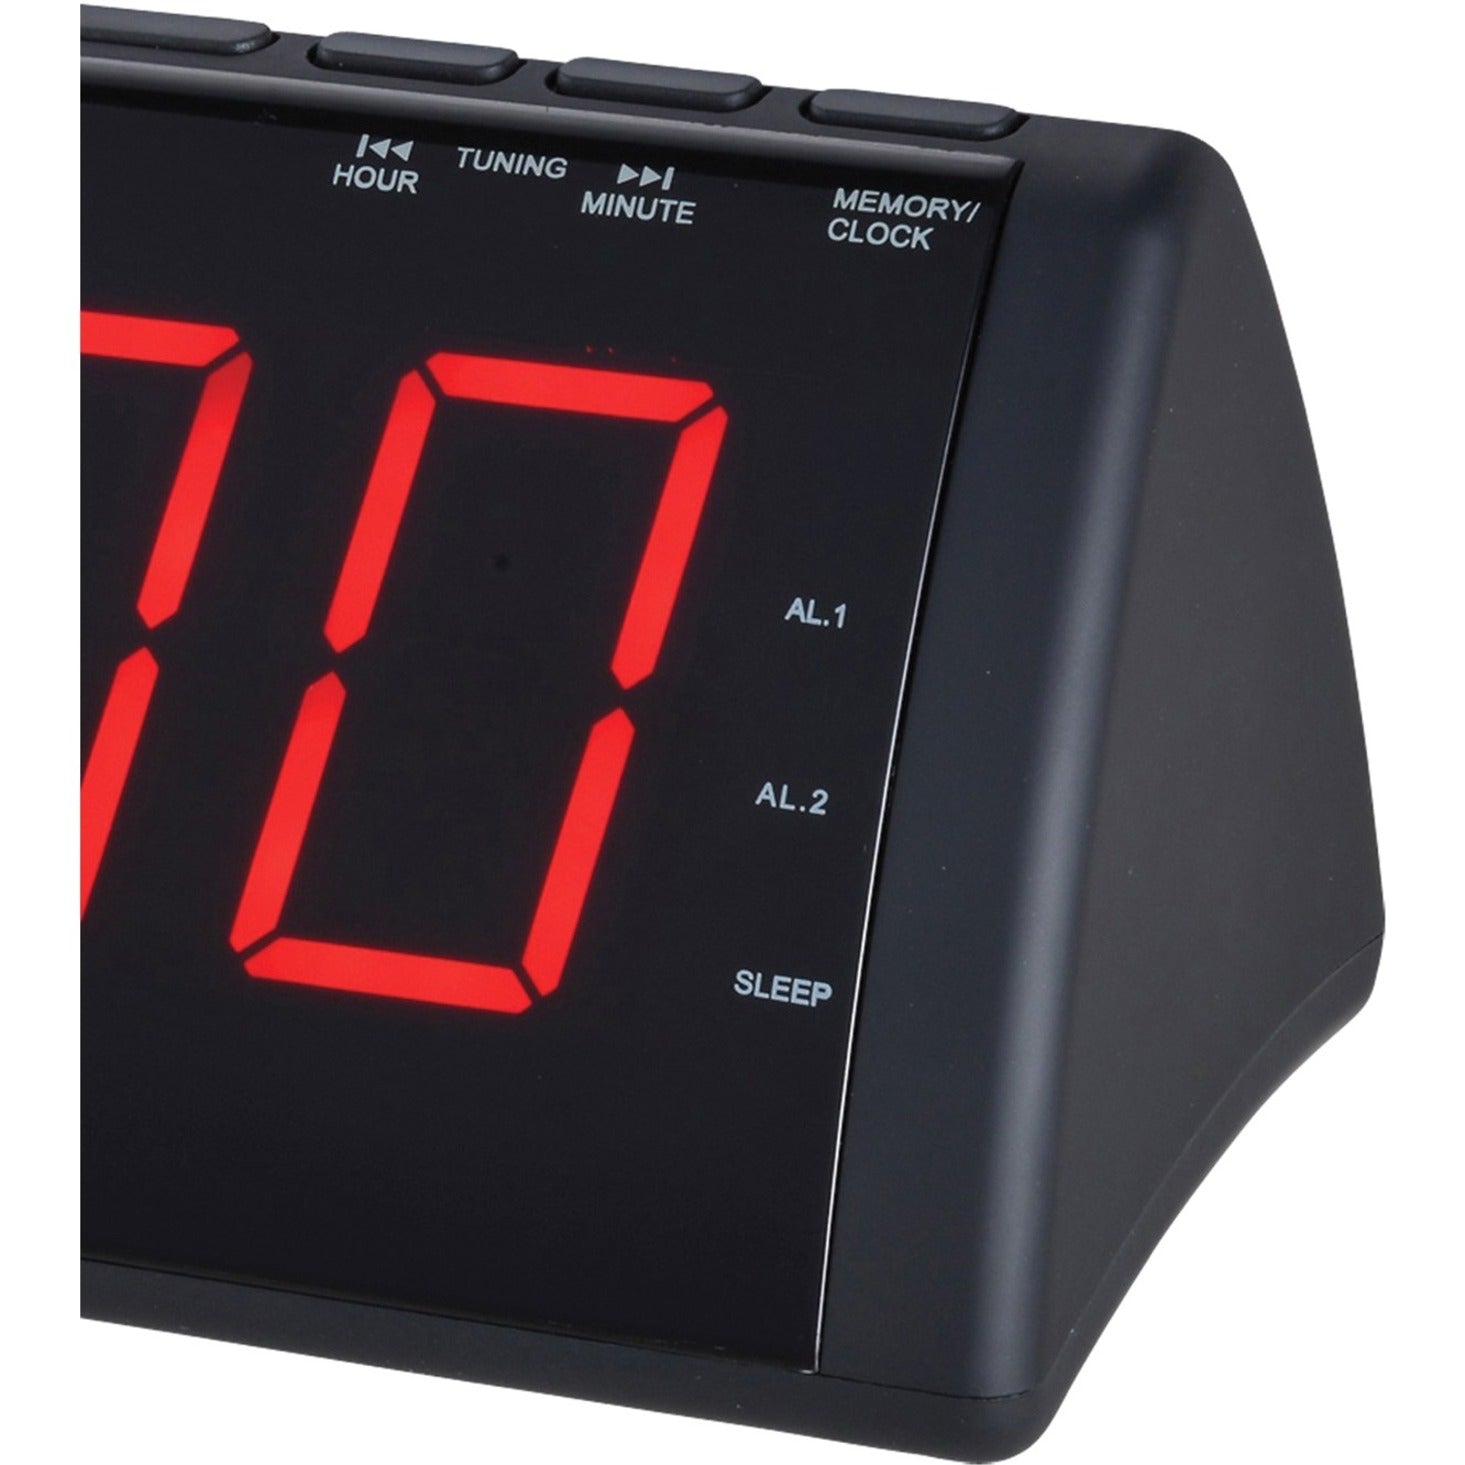 Sylvania SCR1808 Clock Radio - Dual Alarm, AM/FM, USB Charging Port [Discontinued]